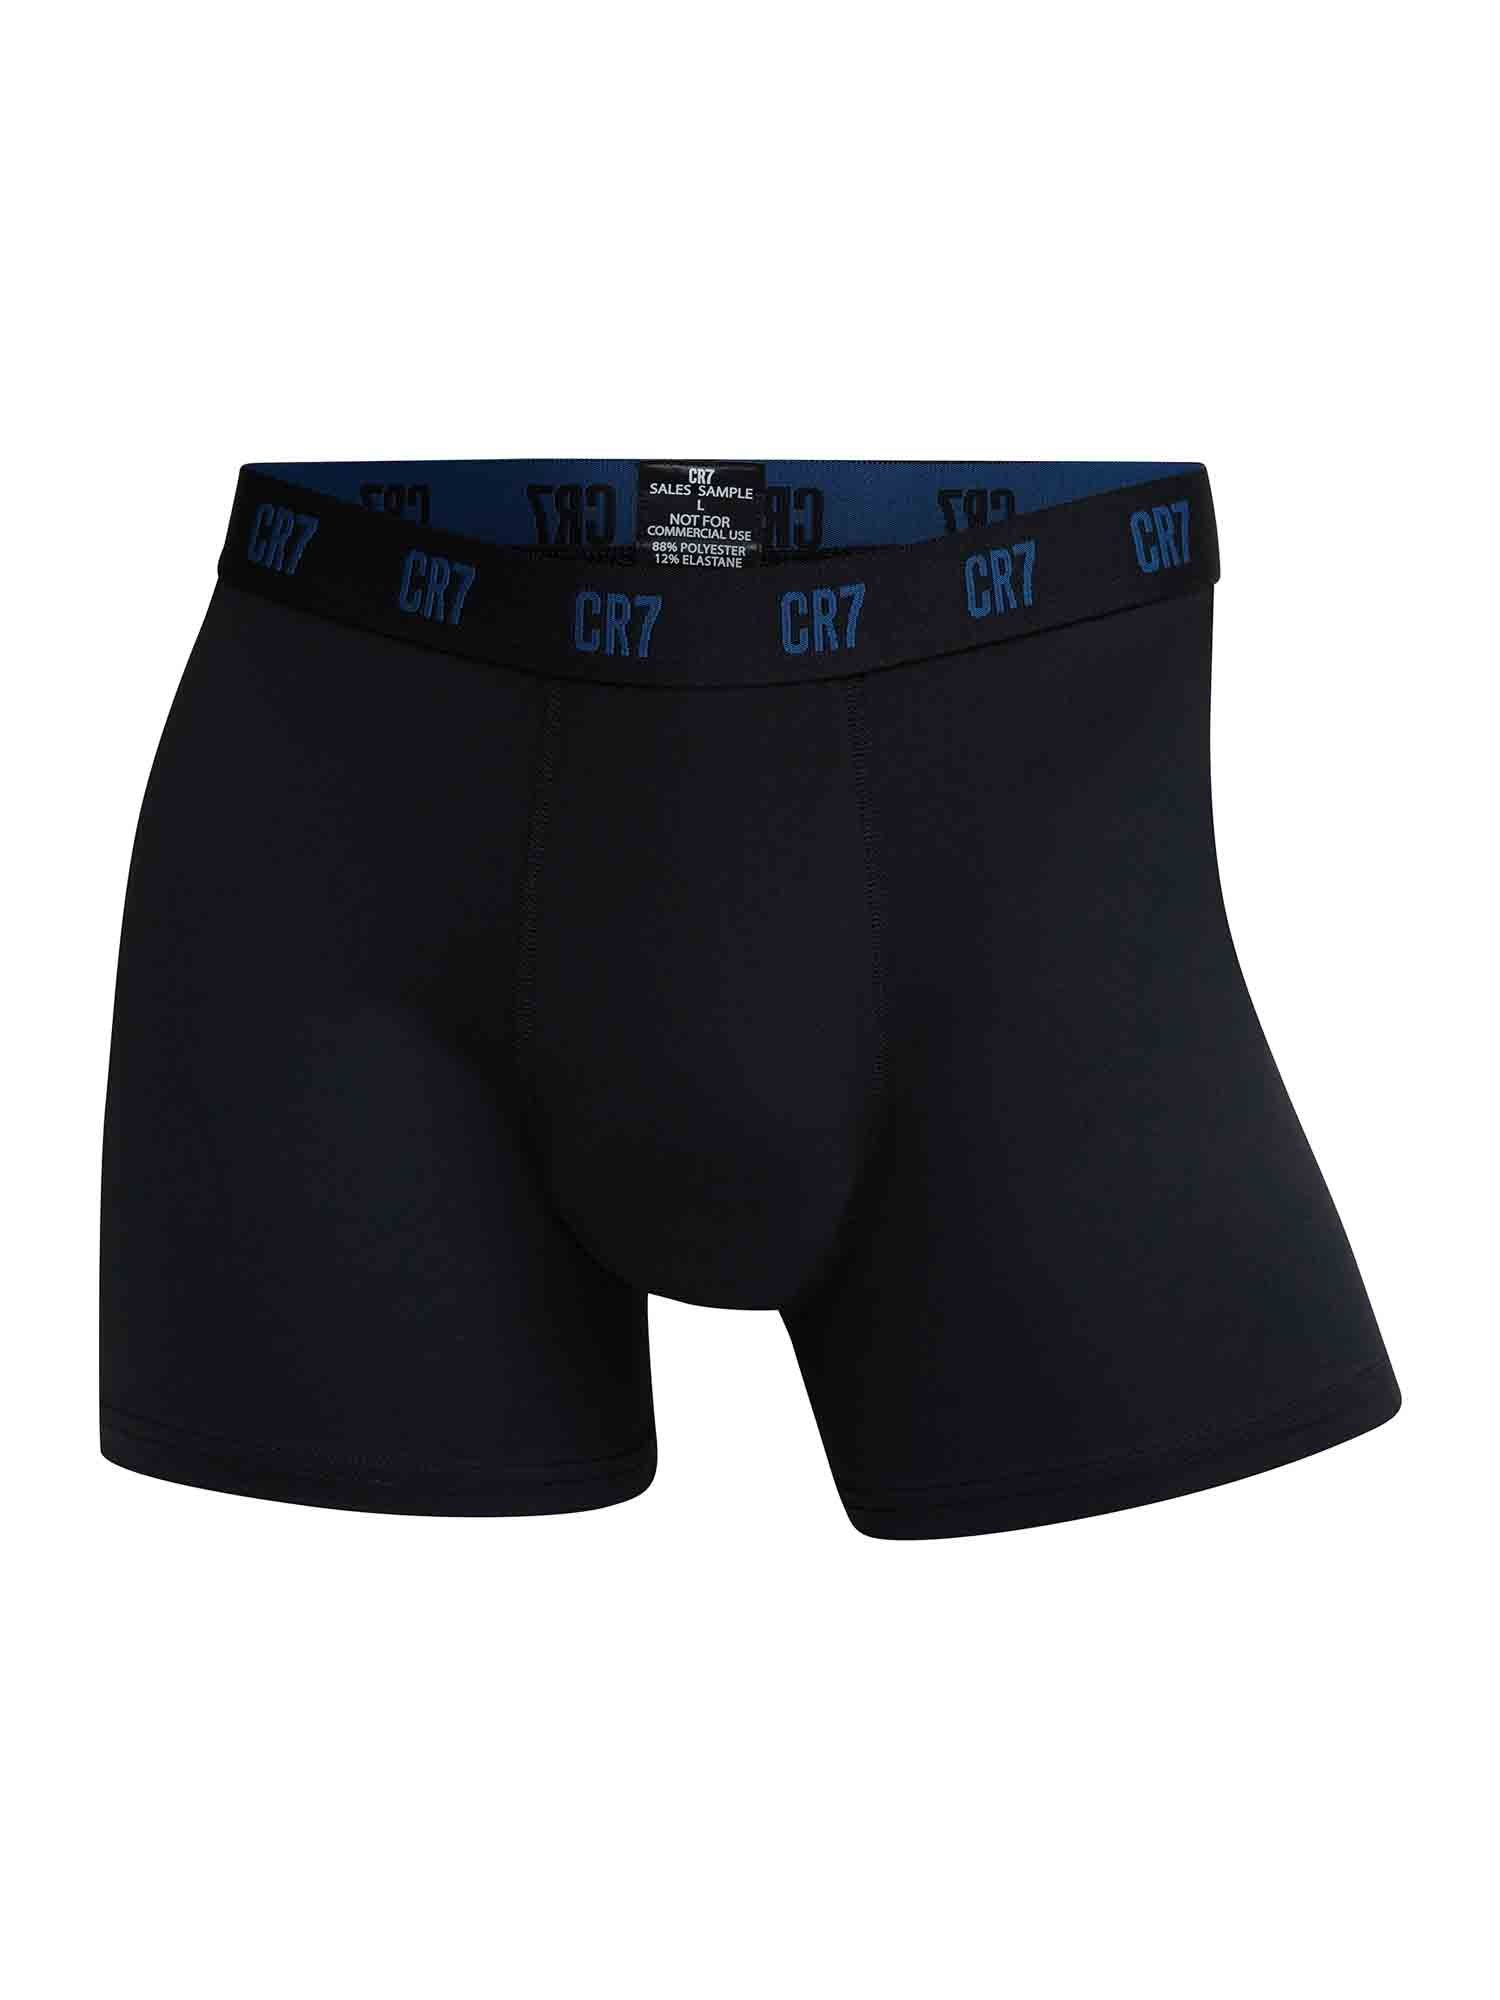 Retro Boxershorts Trunks Pants Pants CR7 Multi (3-St) Multipack Retro Herren Männer 18